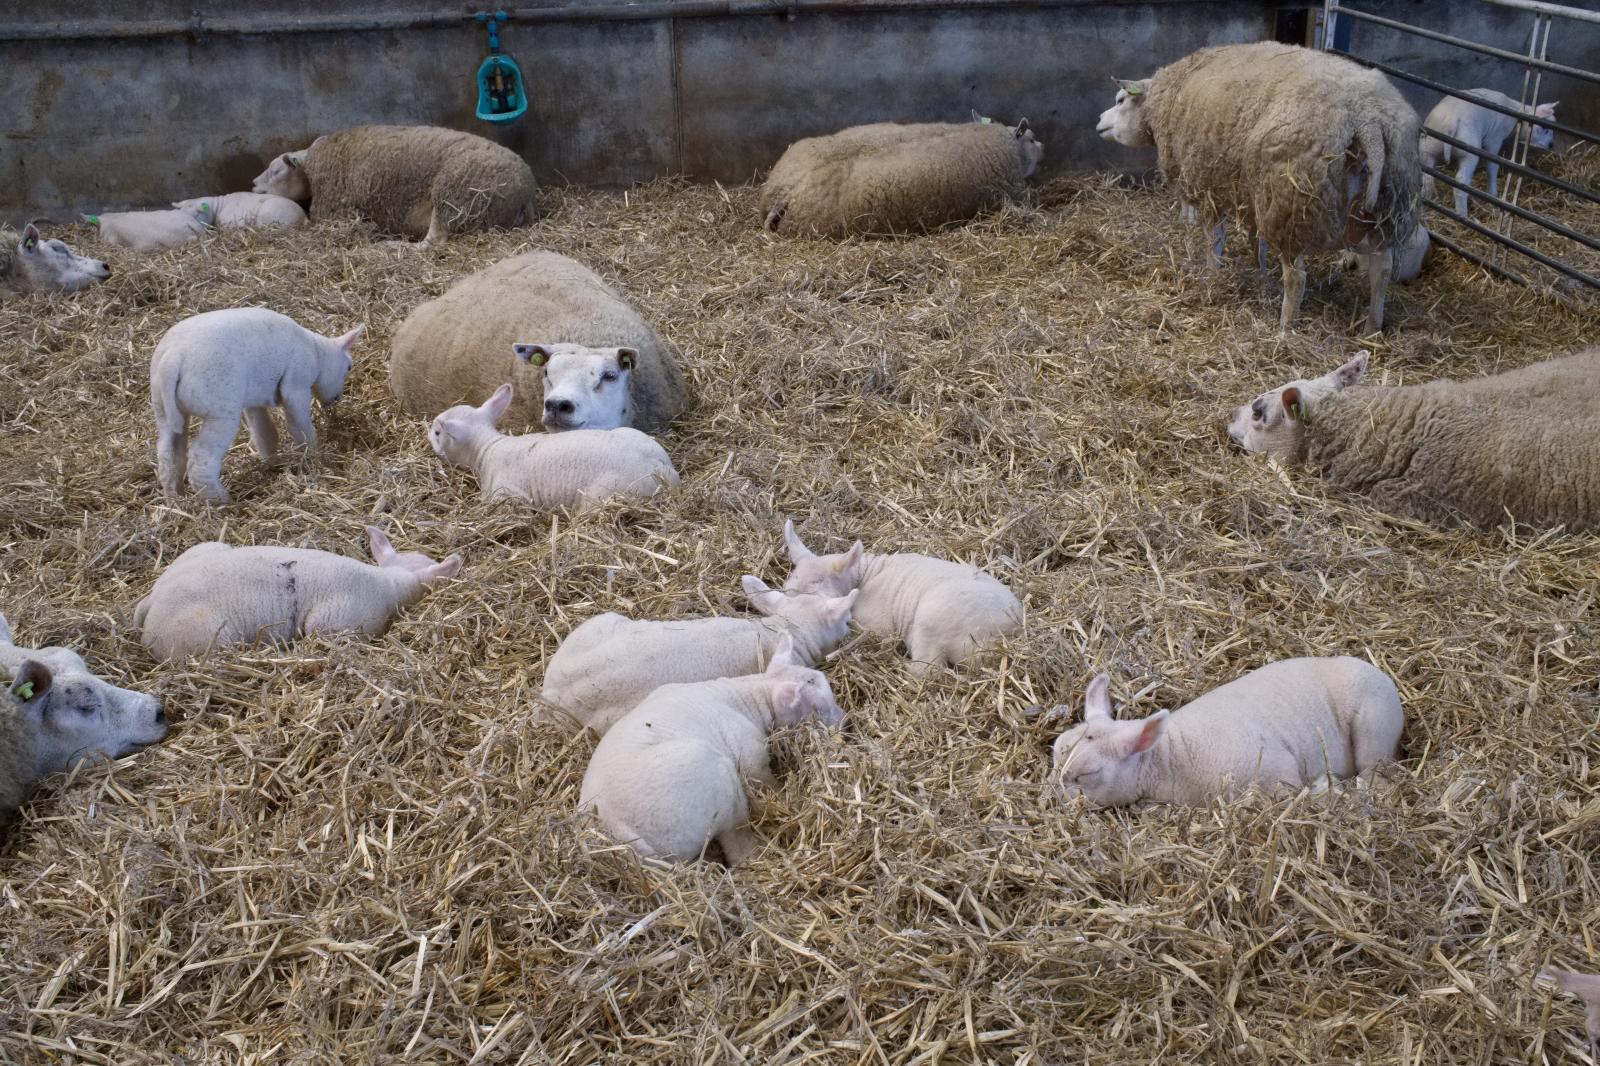 Texel Sheep and Lambs | Buy this image